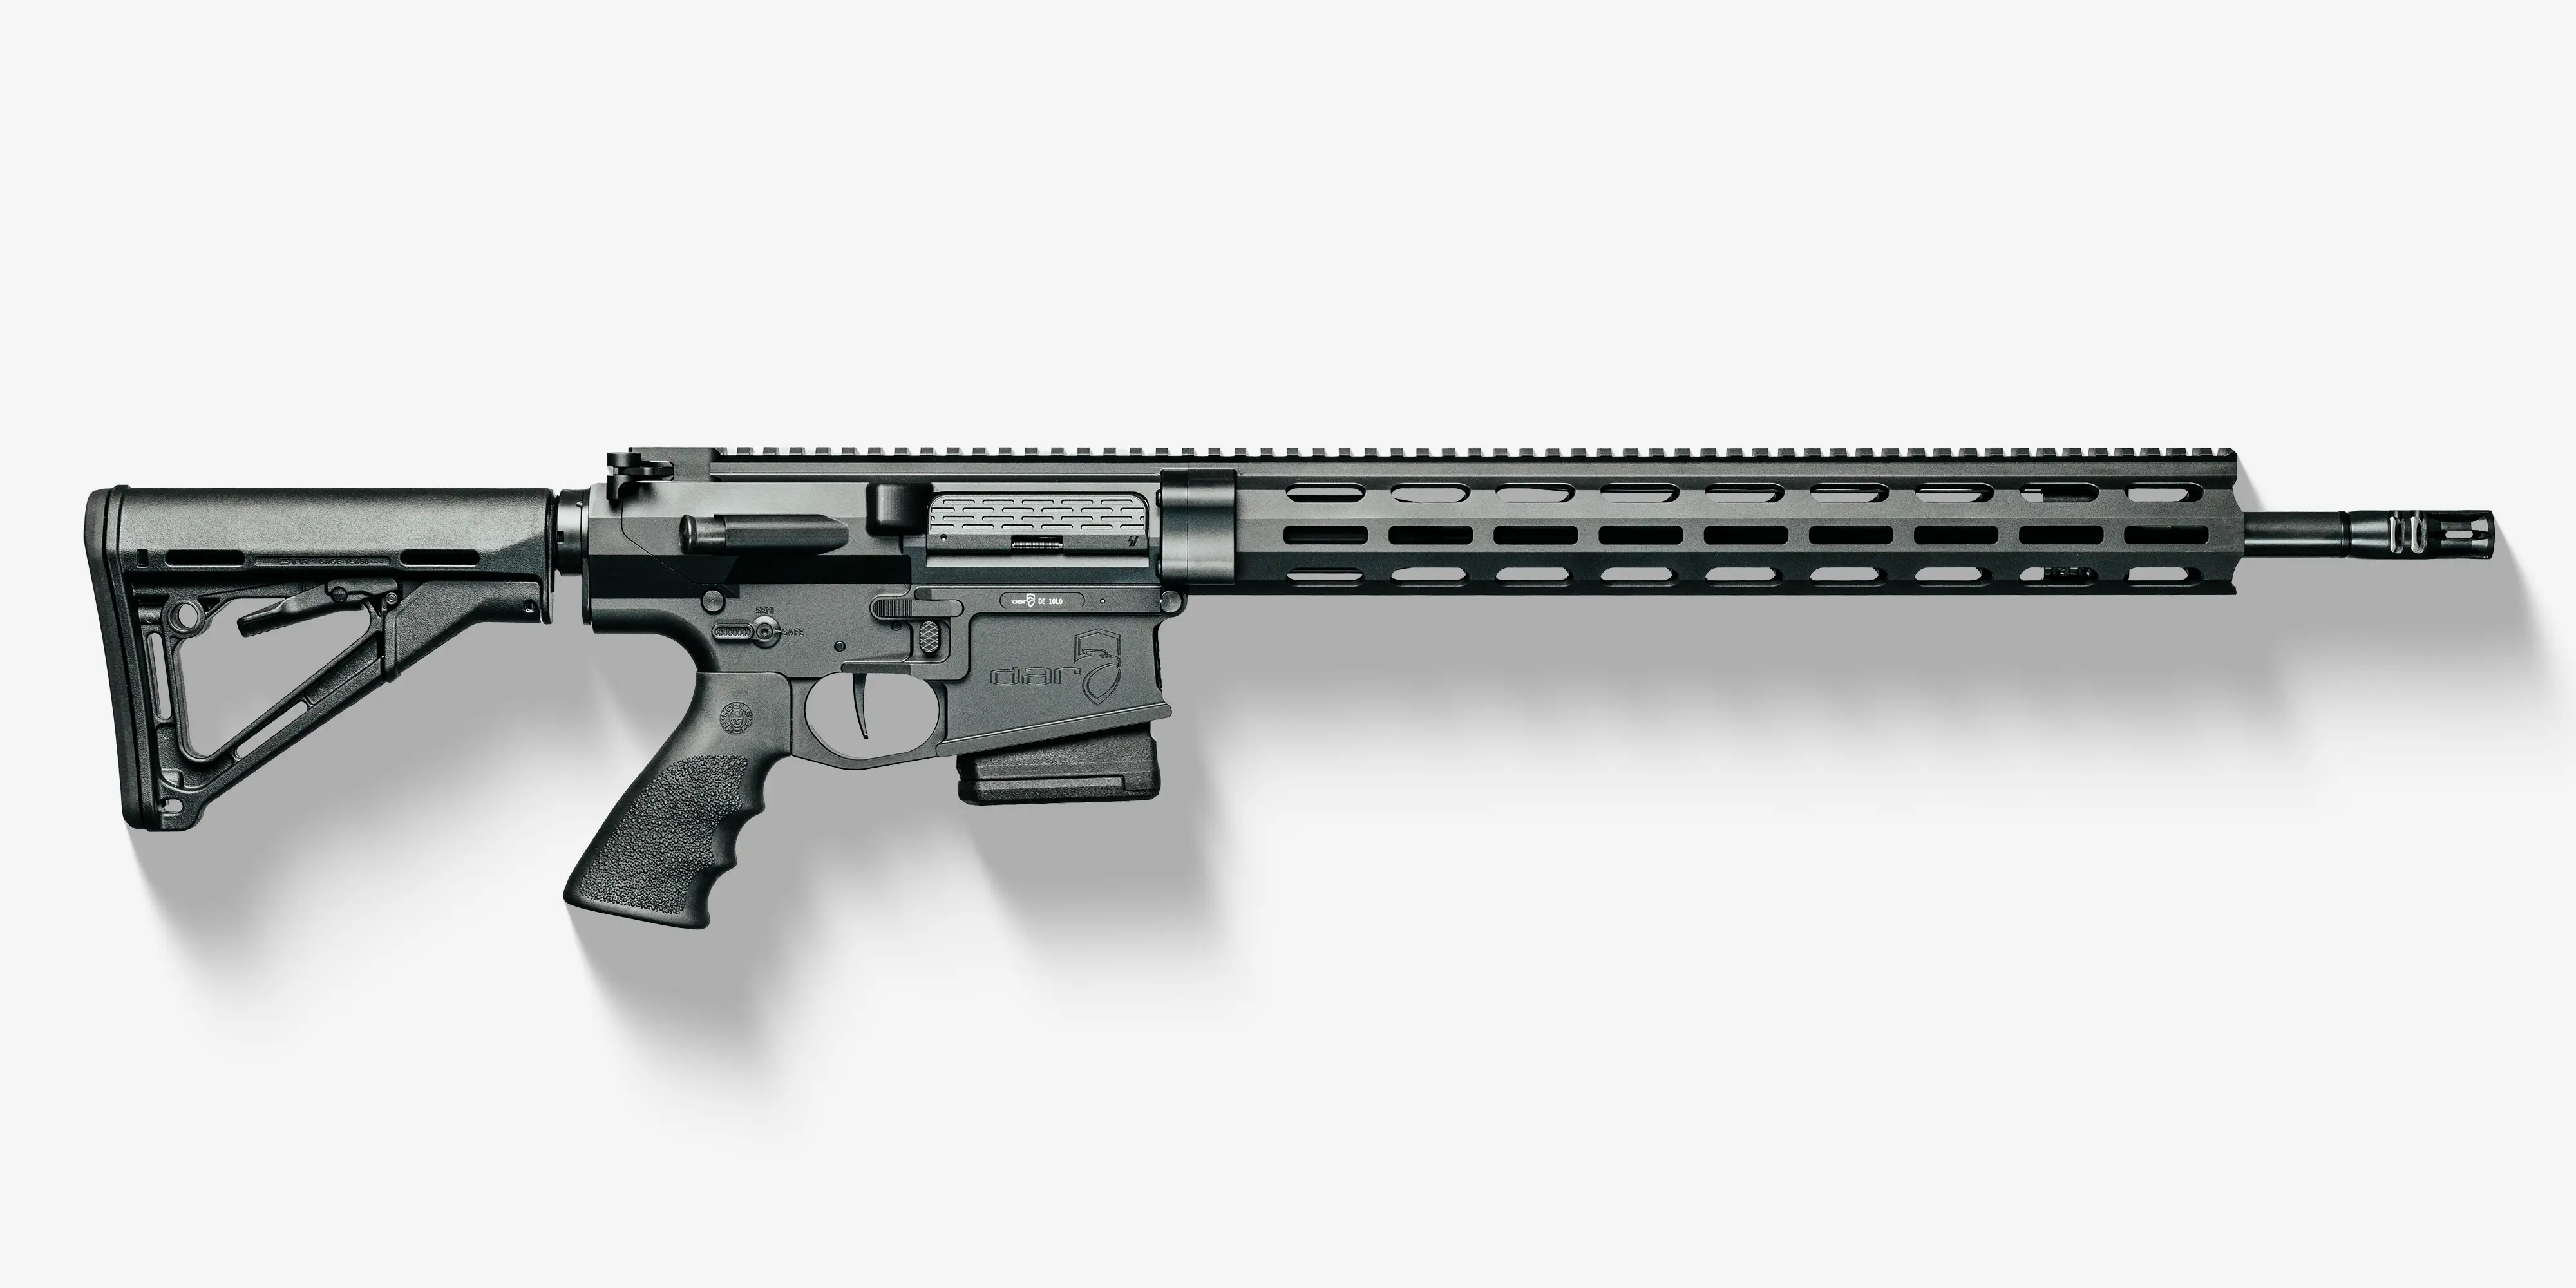 DAR-10 SPR (Special Purpose Rifle)